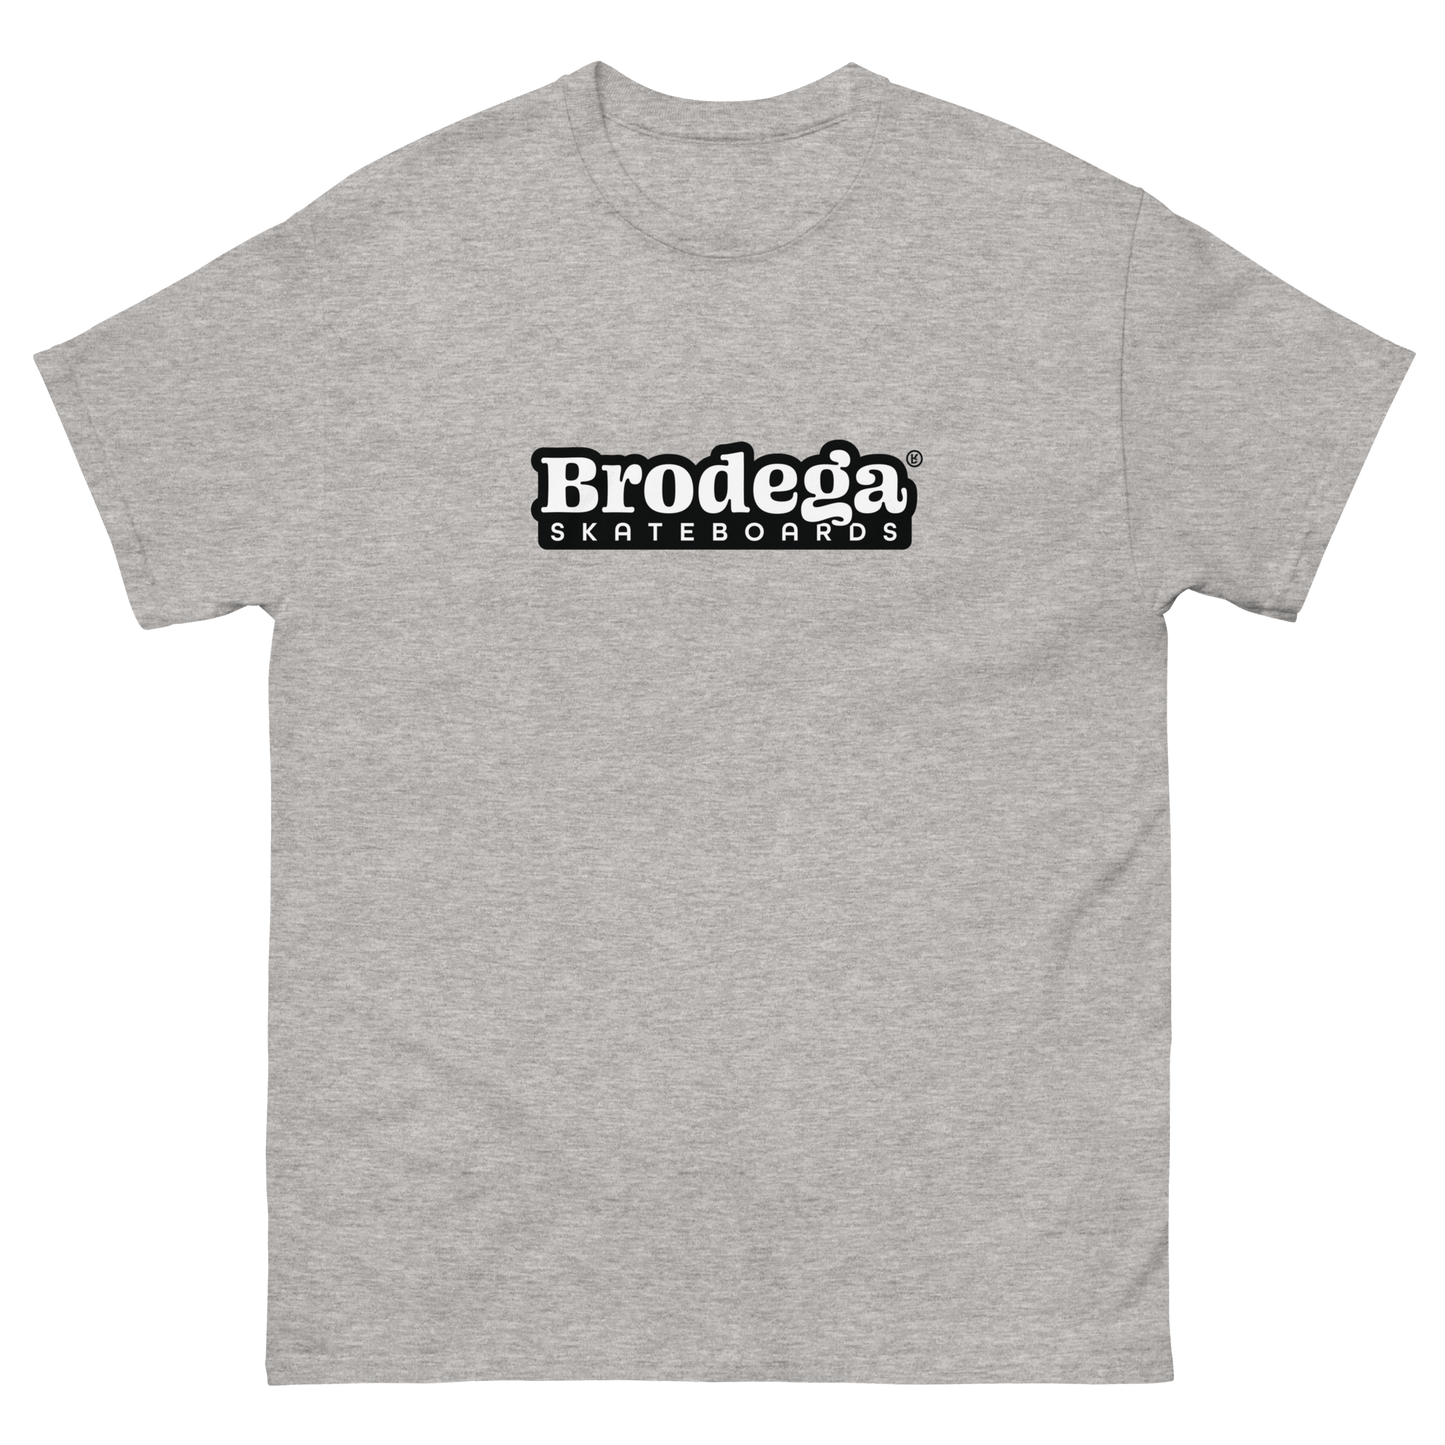 Brodega SB / T-Shirt - Brodega Skateboards